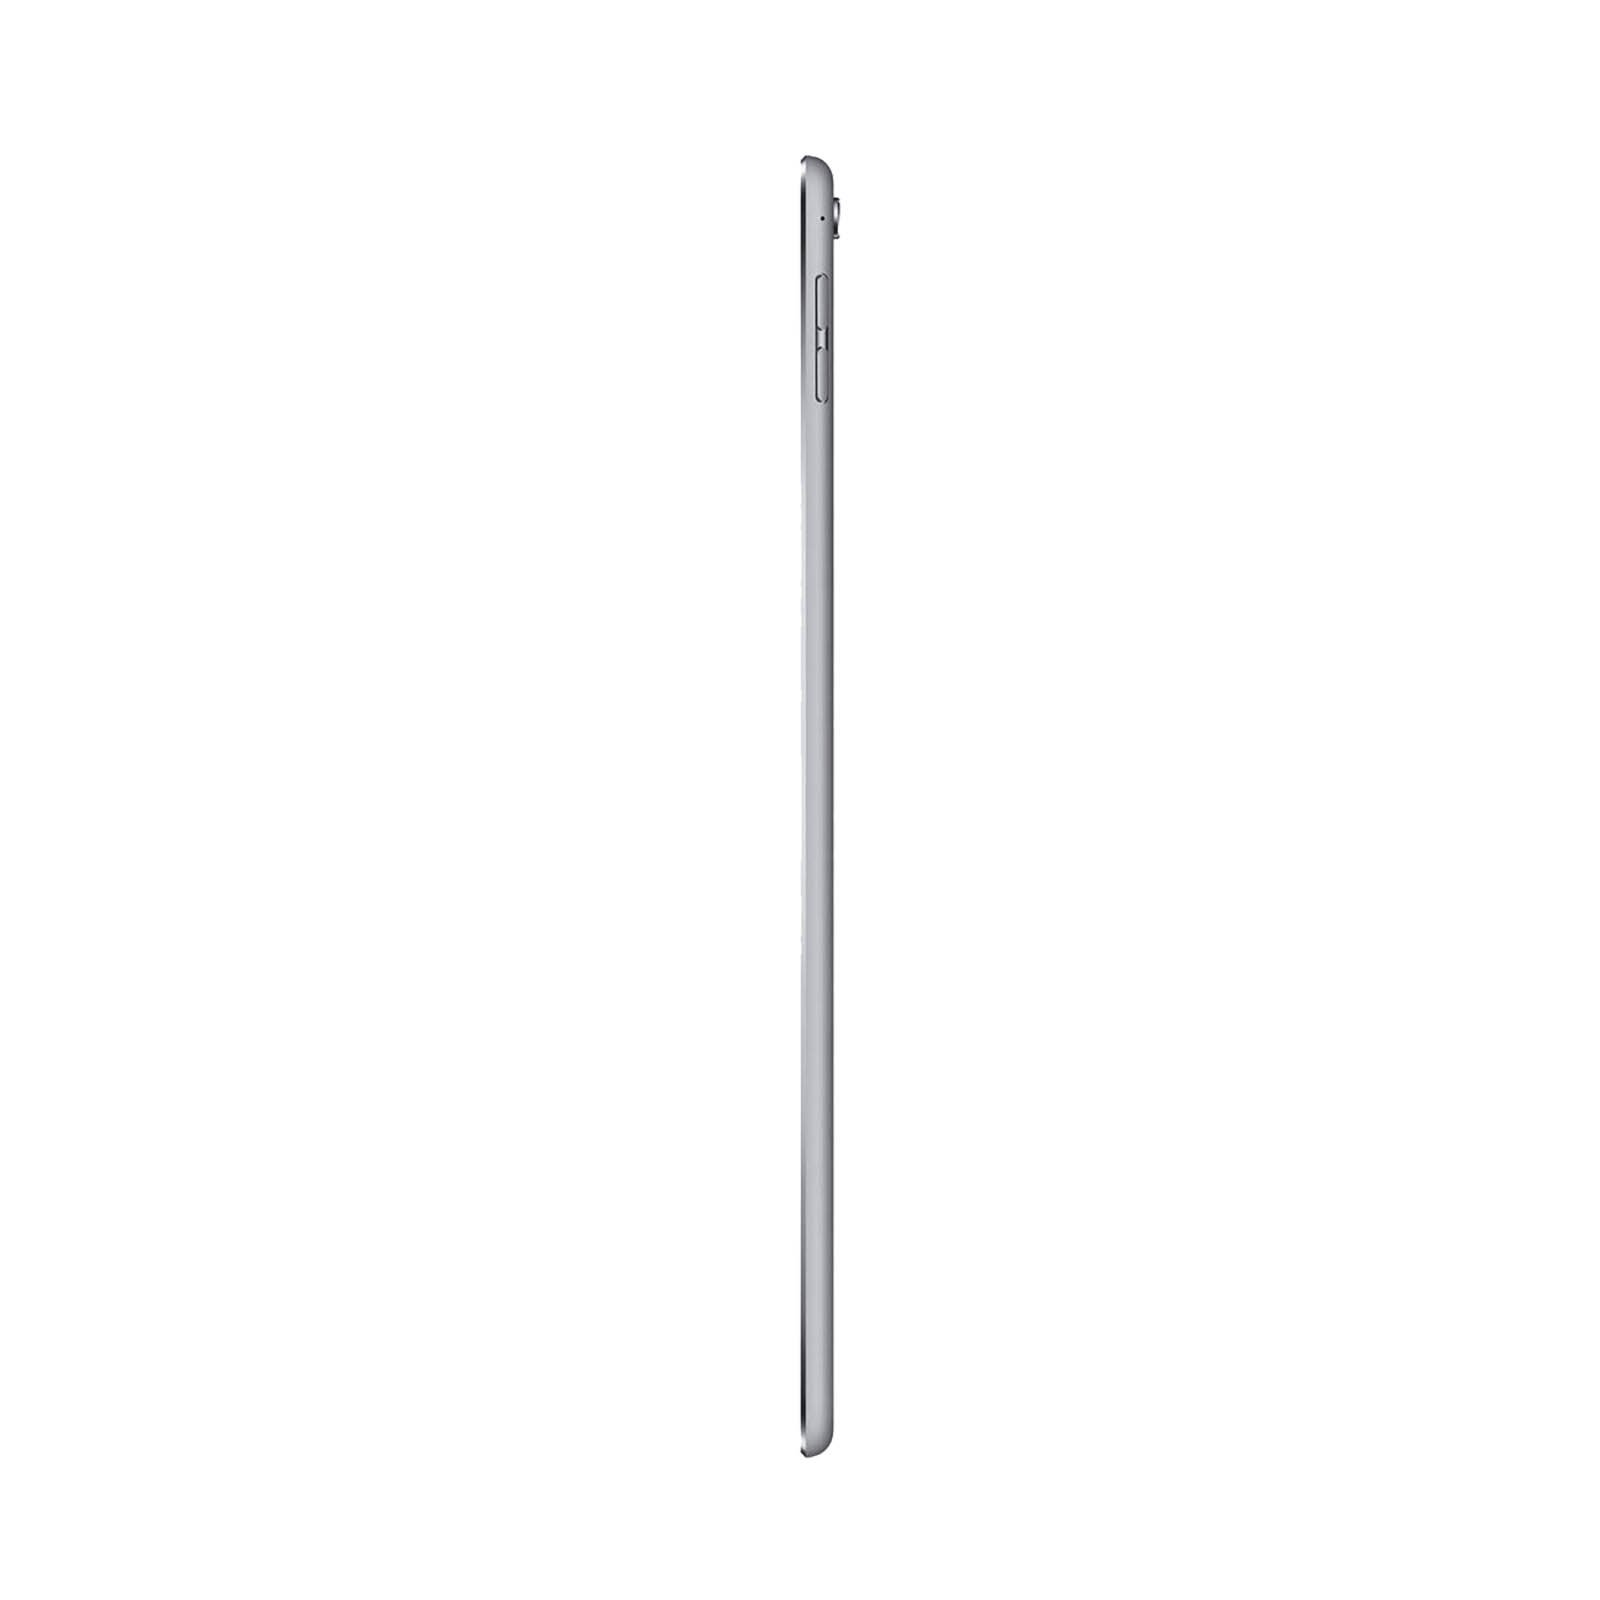 iPad Pro 9.7 Inch 32GB Space Grey Good - Unlocked